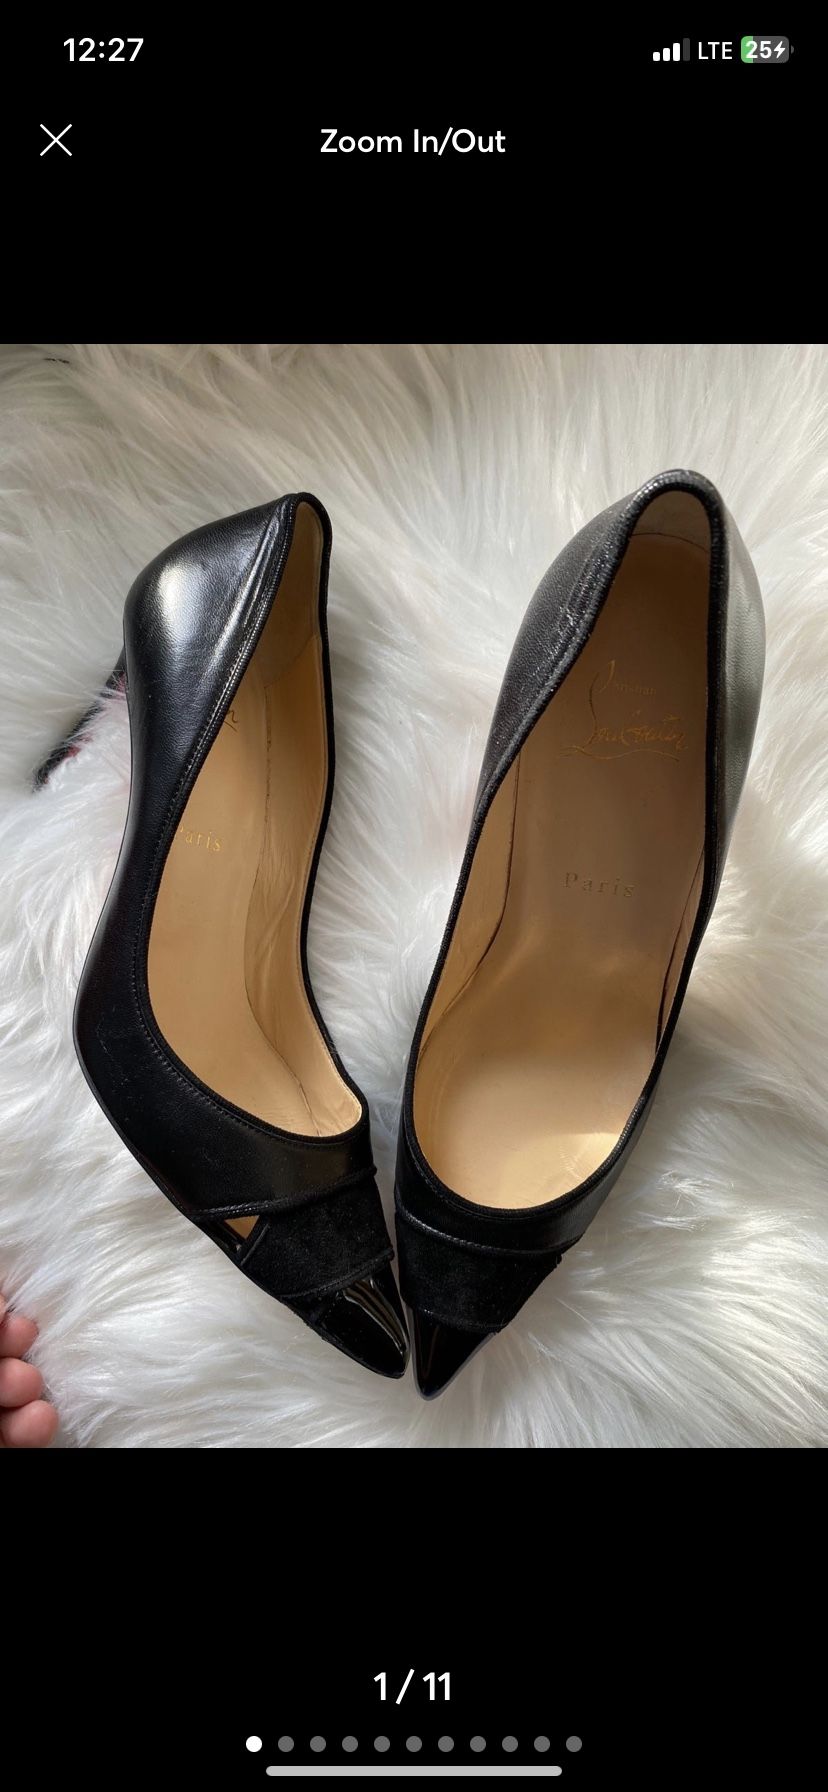 Christian Louboutin Hot leather heels size 38 US 7.5